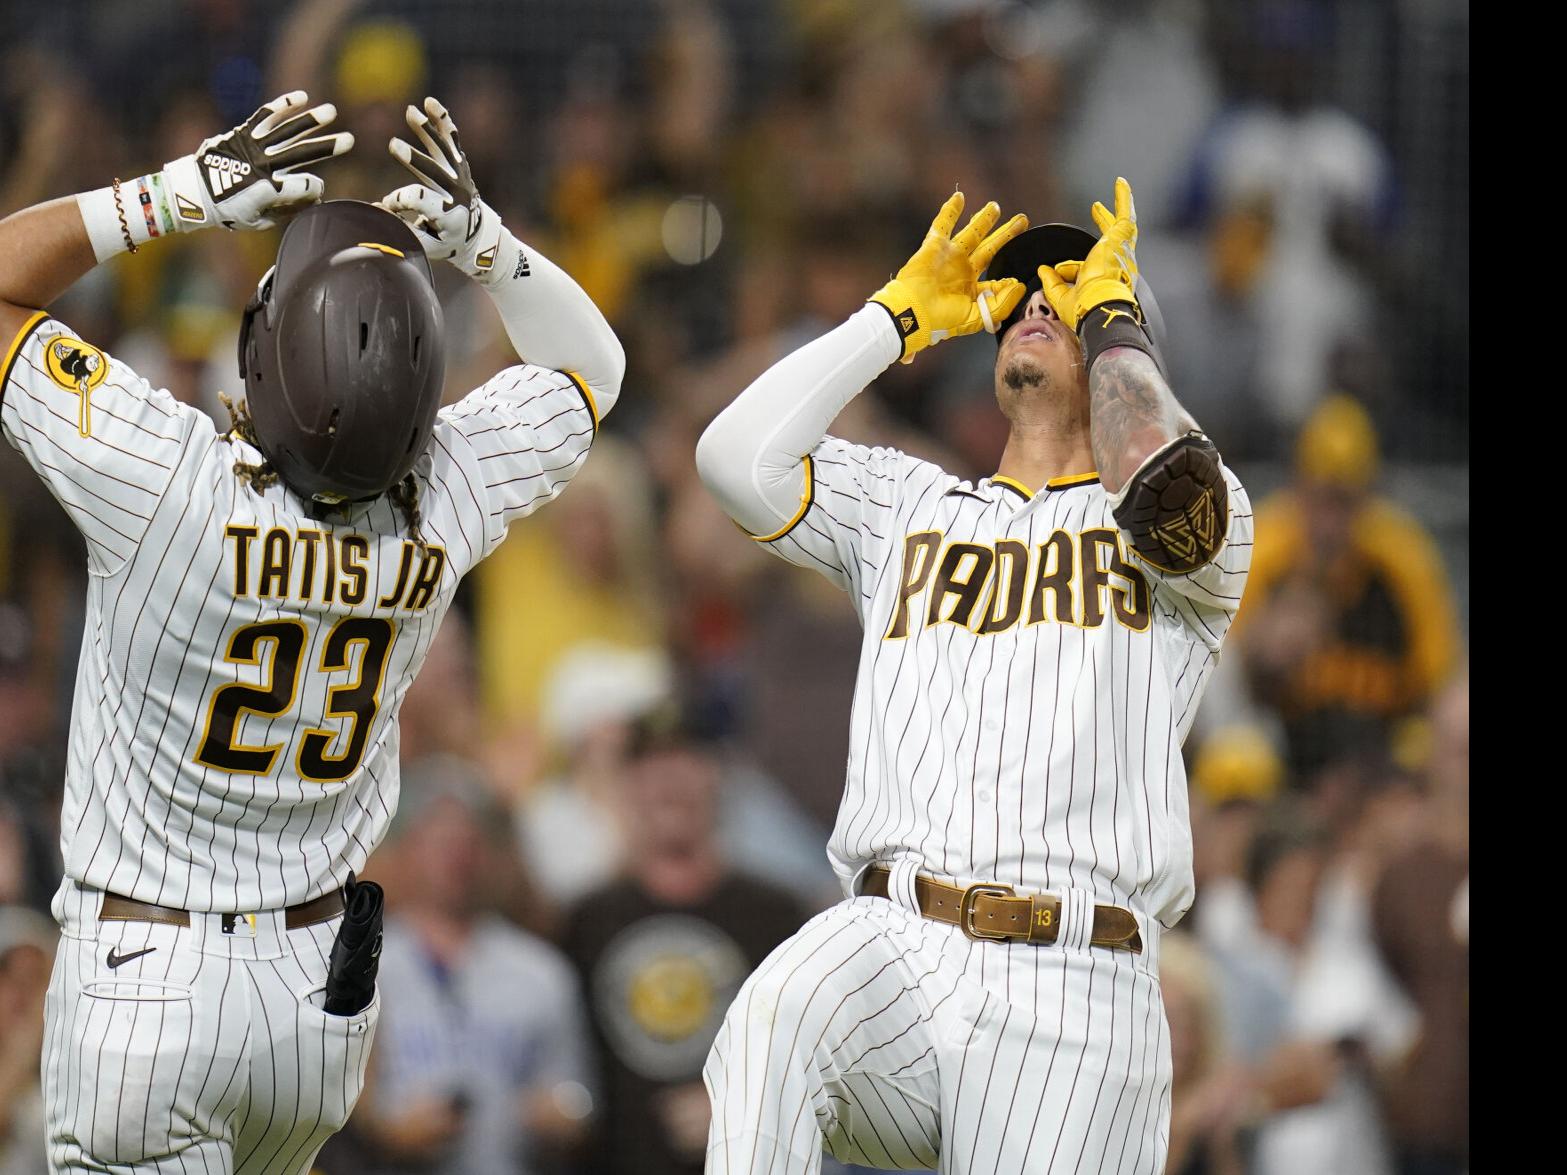 Fernando Tatis Jr. is bringing joy back to baseball